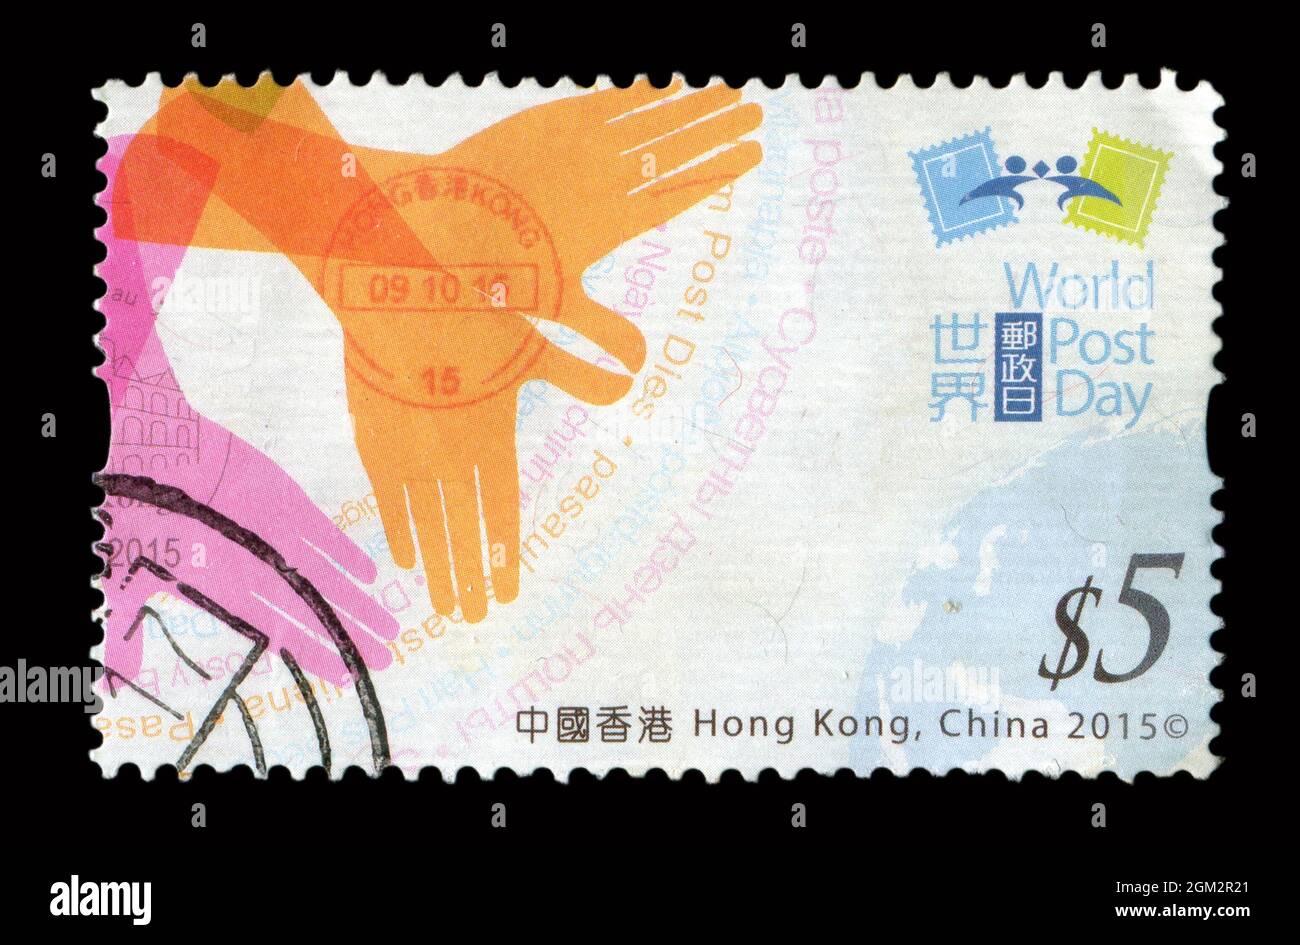 Stamp printed in HONG KONG, China shows image of the World Post Day, circa 2015. Stock Photo